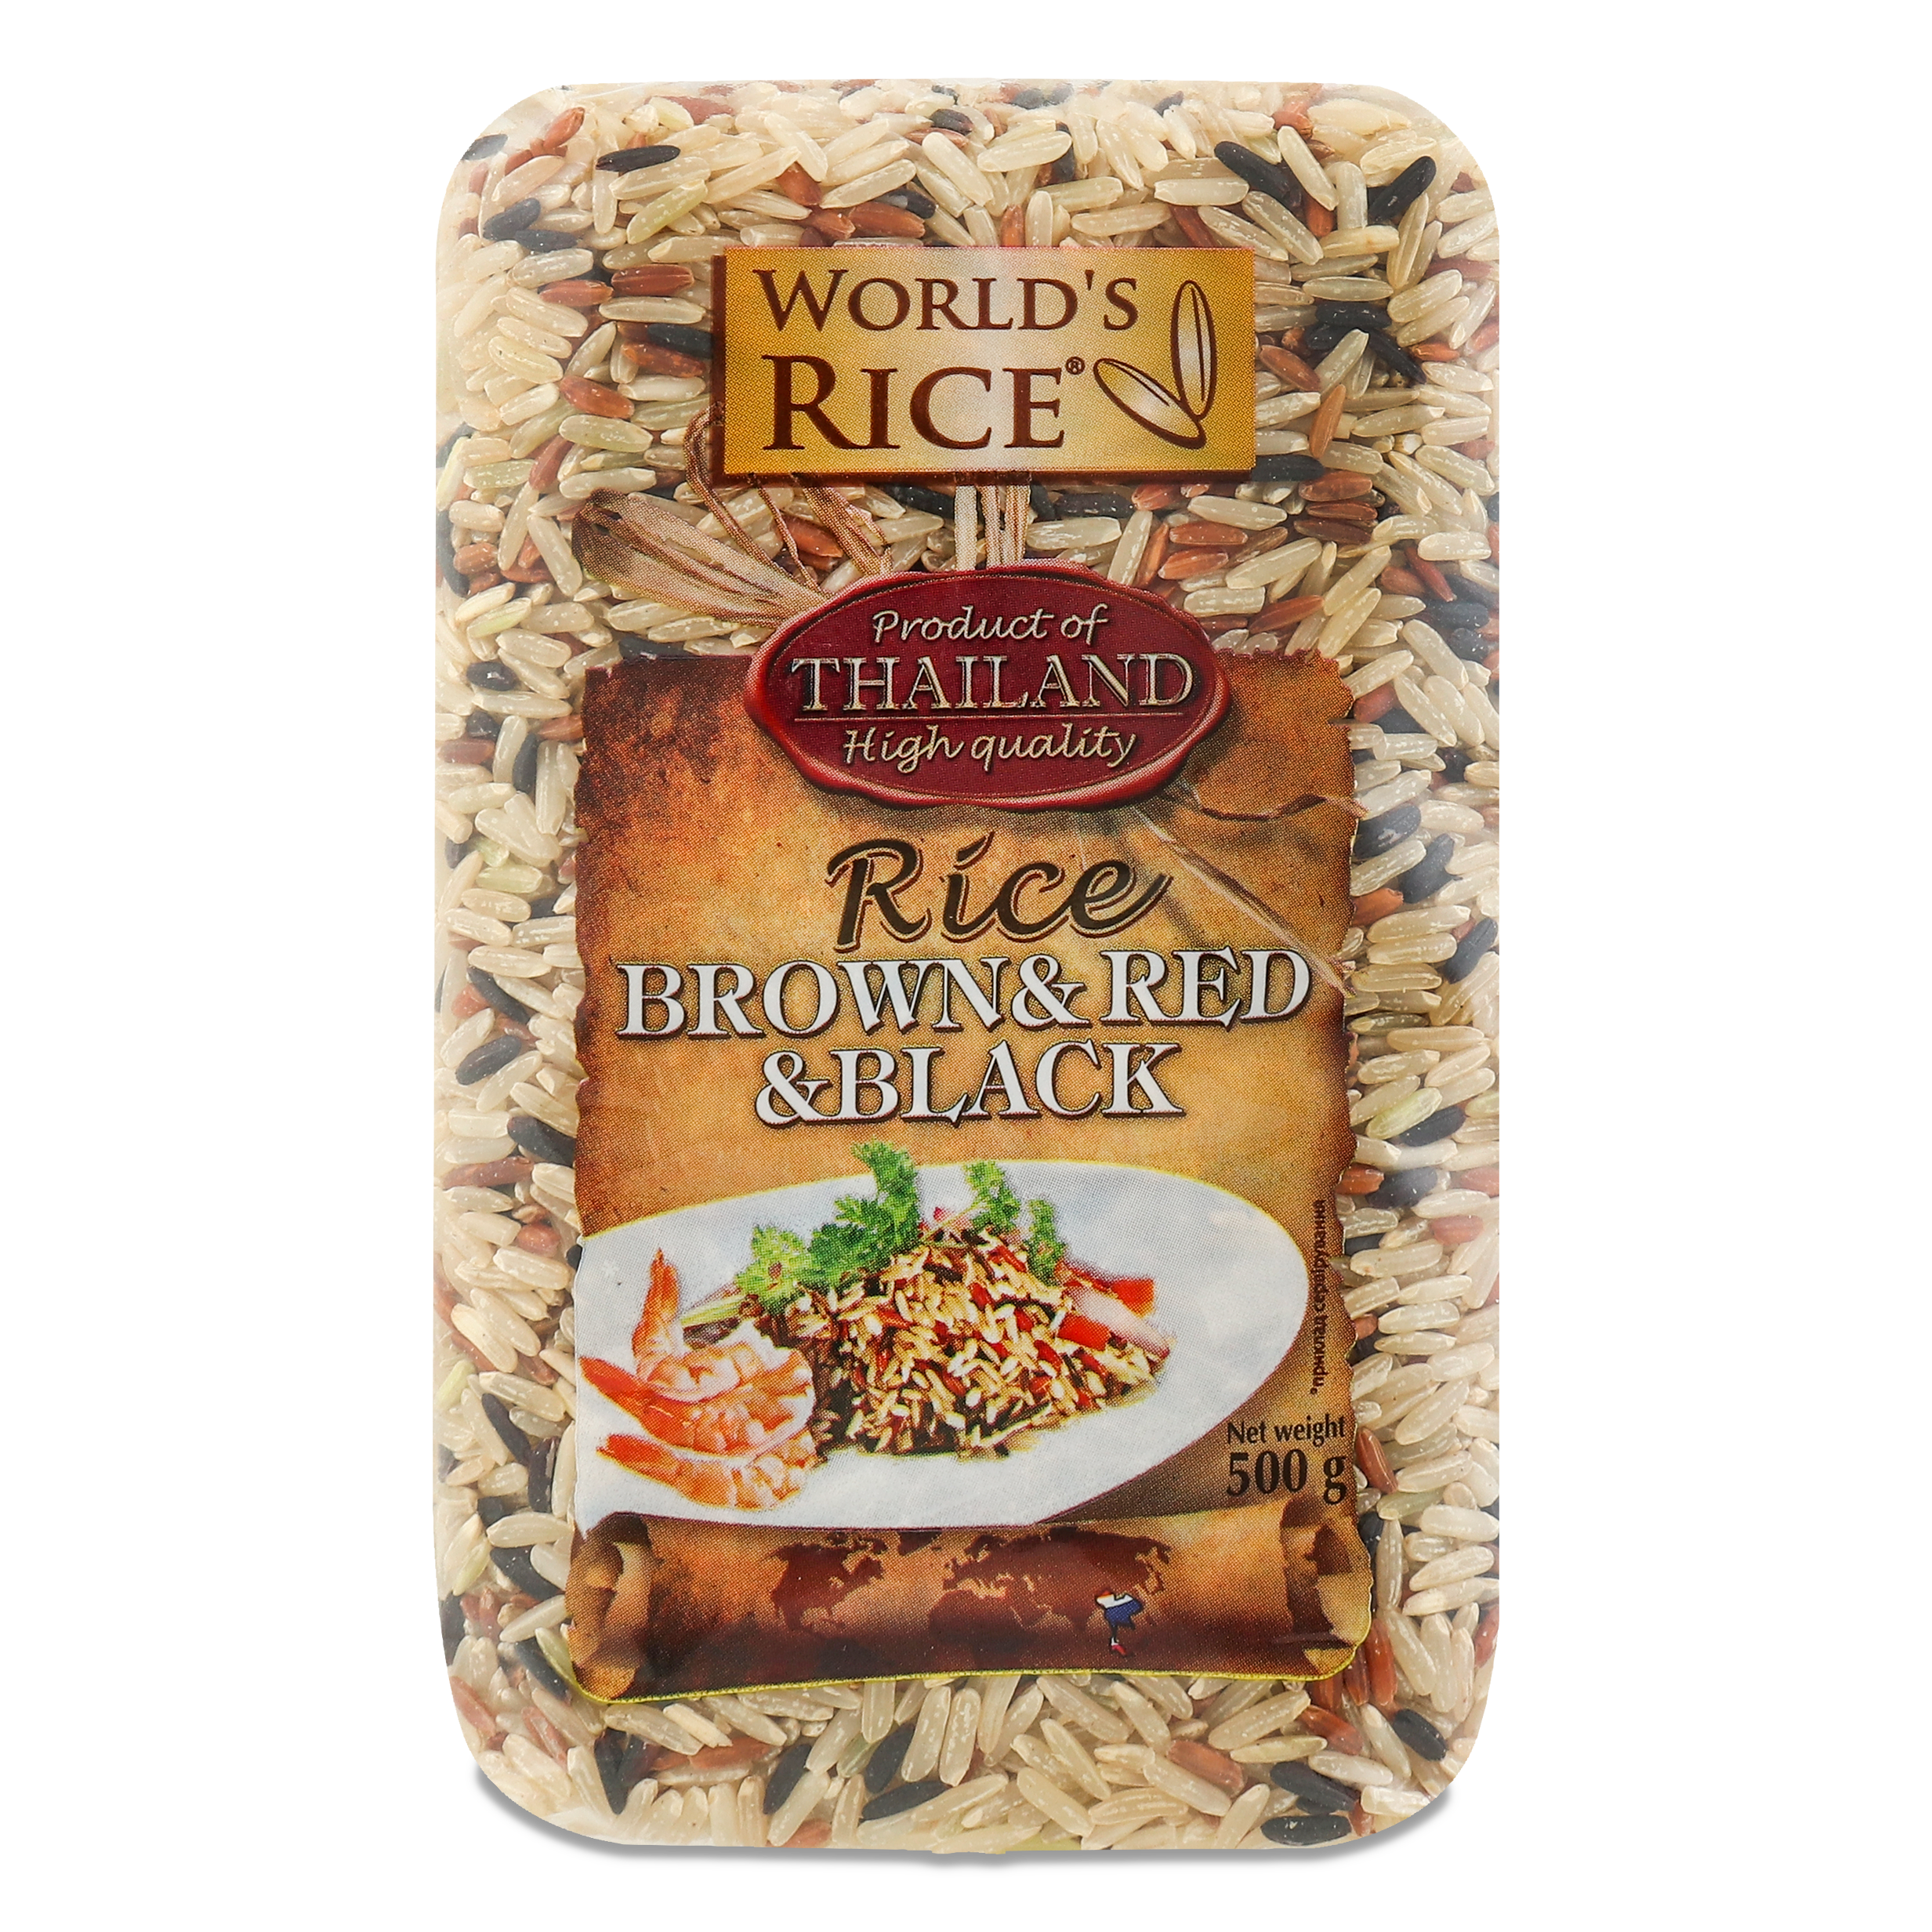 World's Rice brown & red & black rice 500g